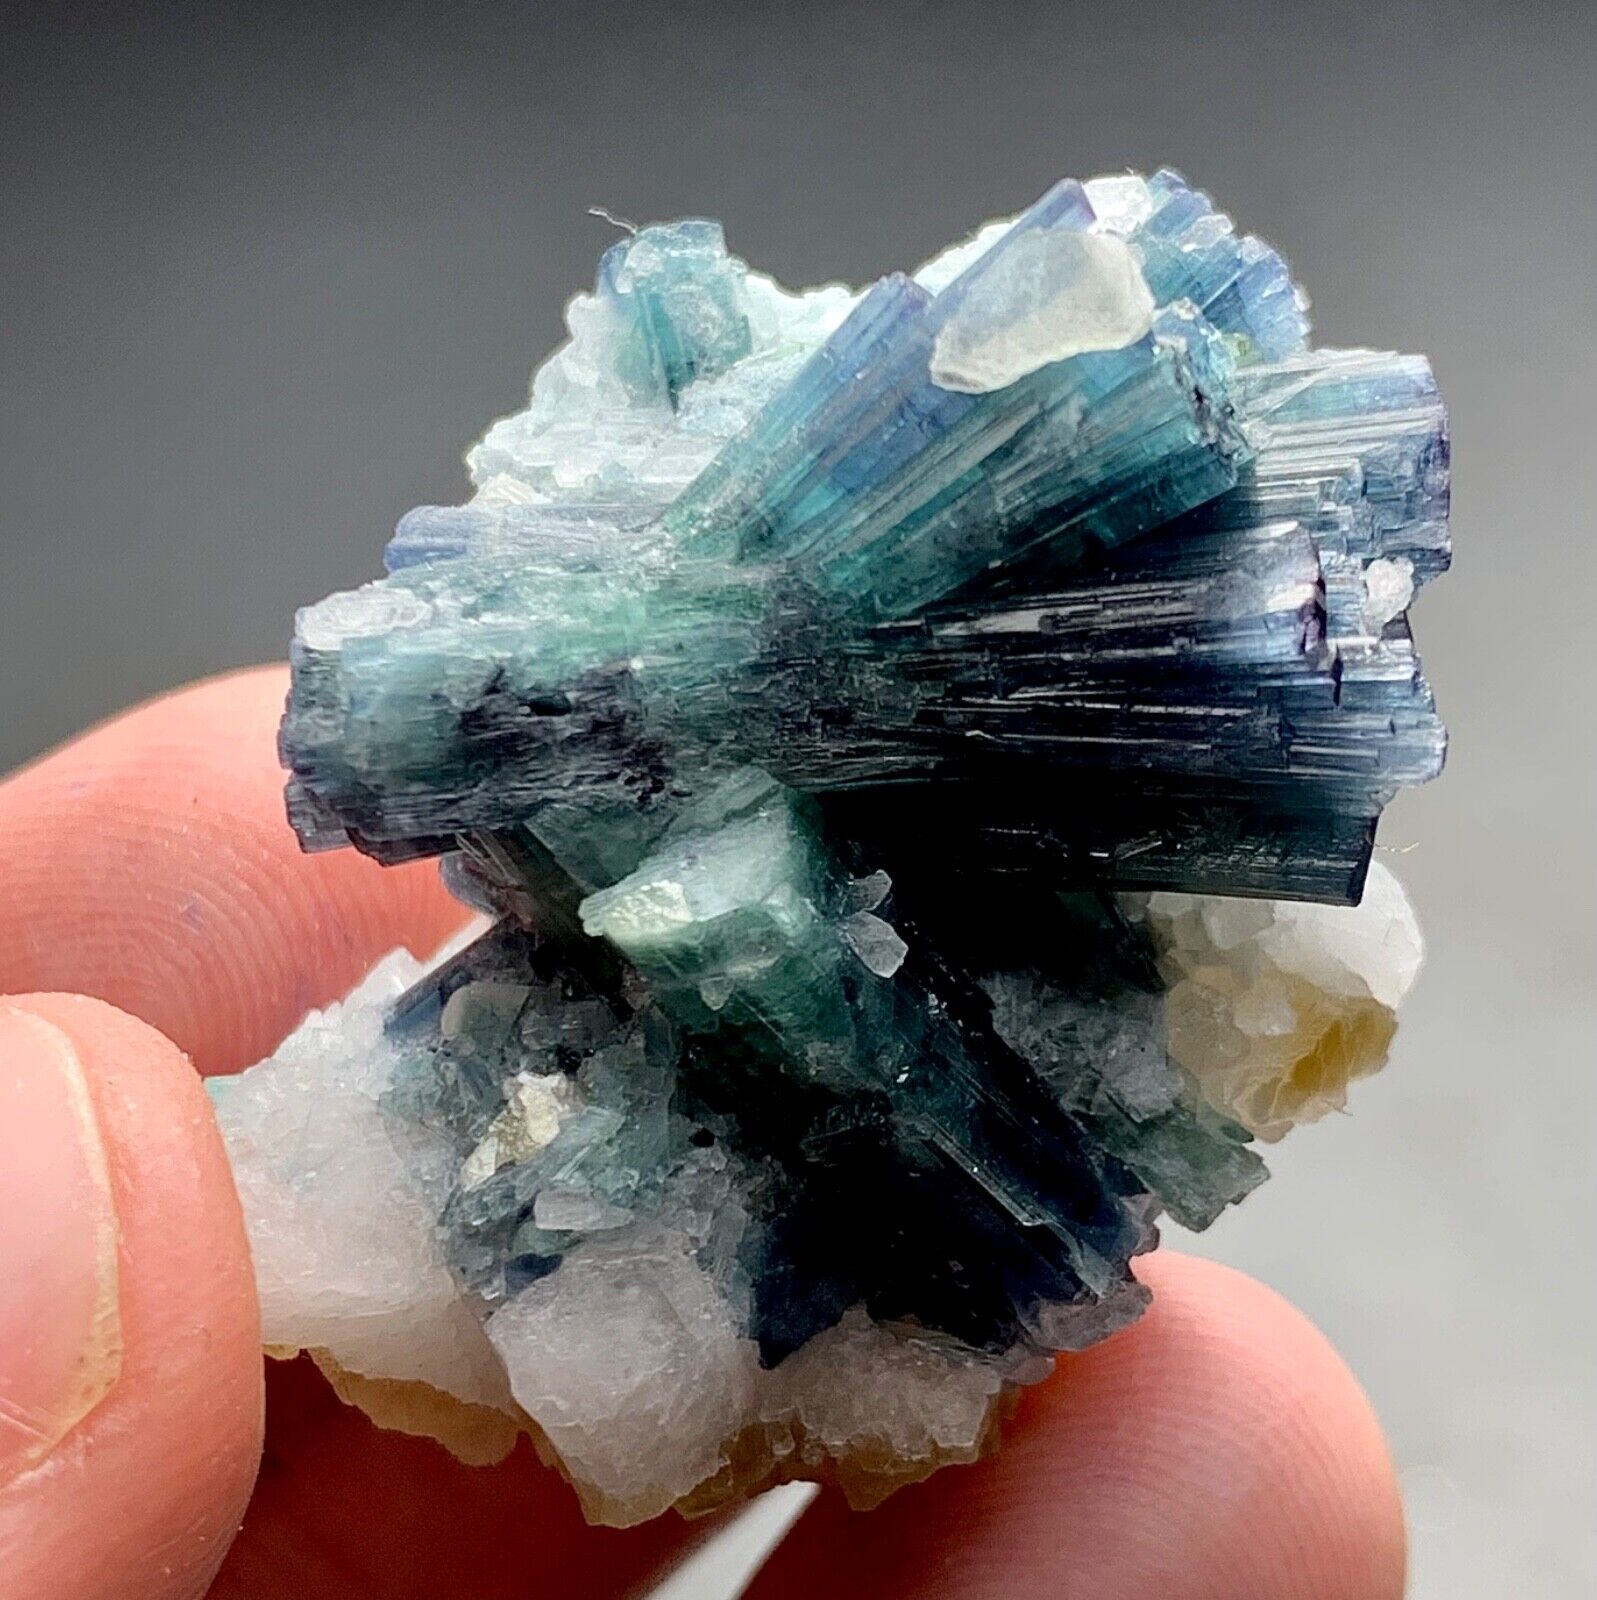 100 Carat Indicolite Tourmaline Crystal Specimen From Afghanistan